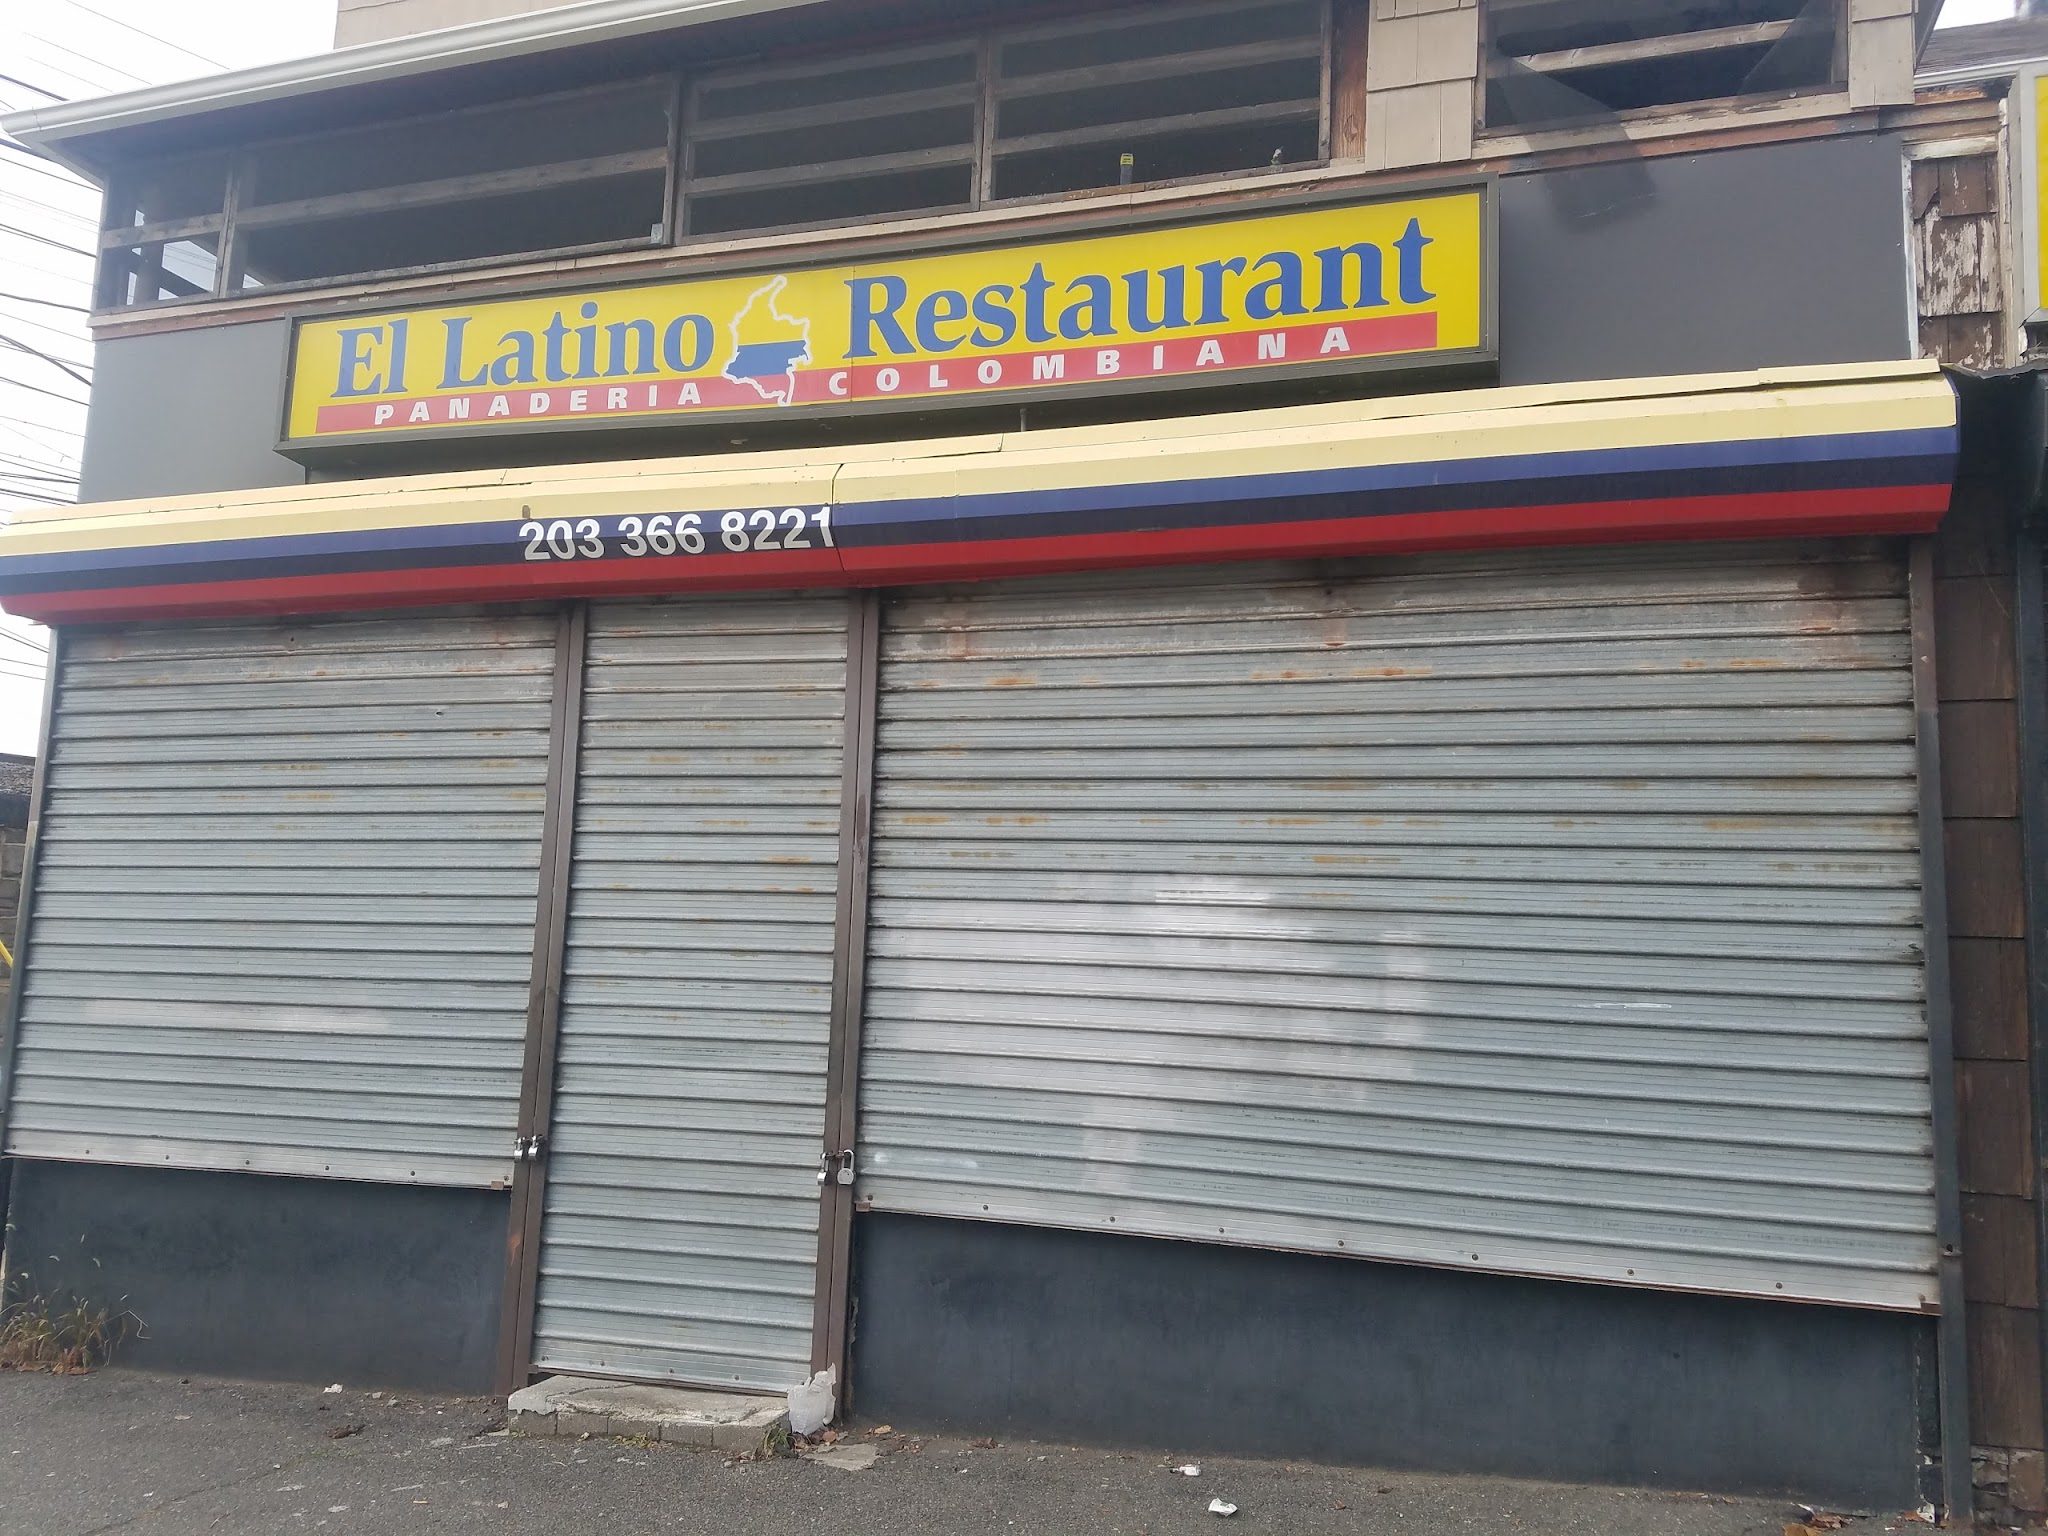 El Latino Restaurant Social Pictures